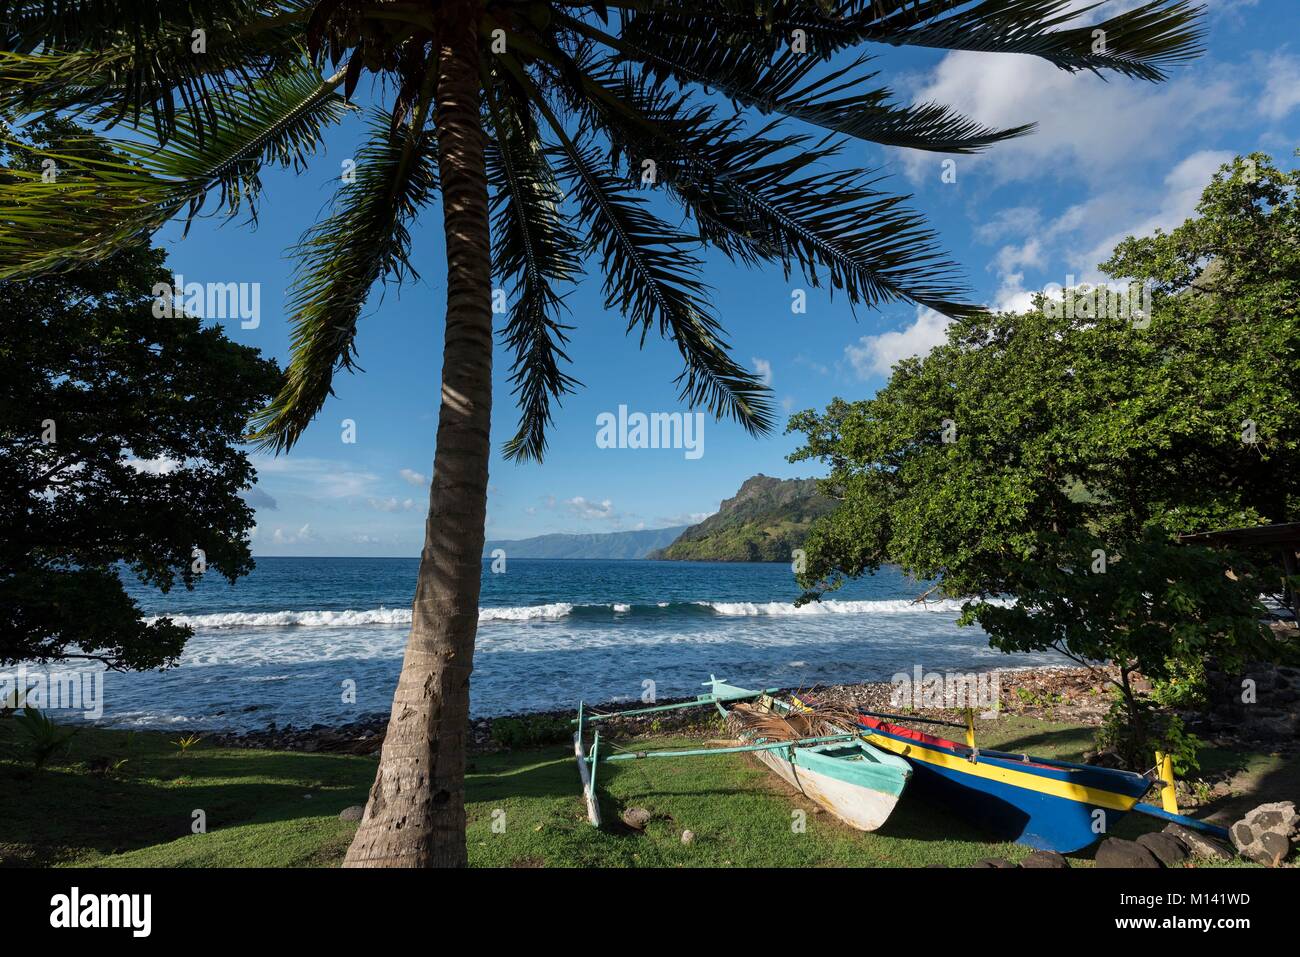 France, French Polynesia, Marquesas archipelago, Tahuata island, Hapatoni, outrigger canoe, beach and coconut tree Stock Photo